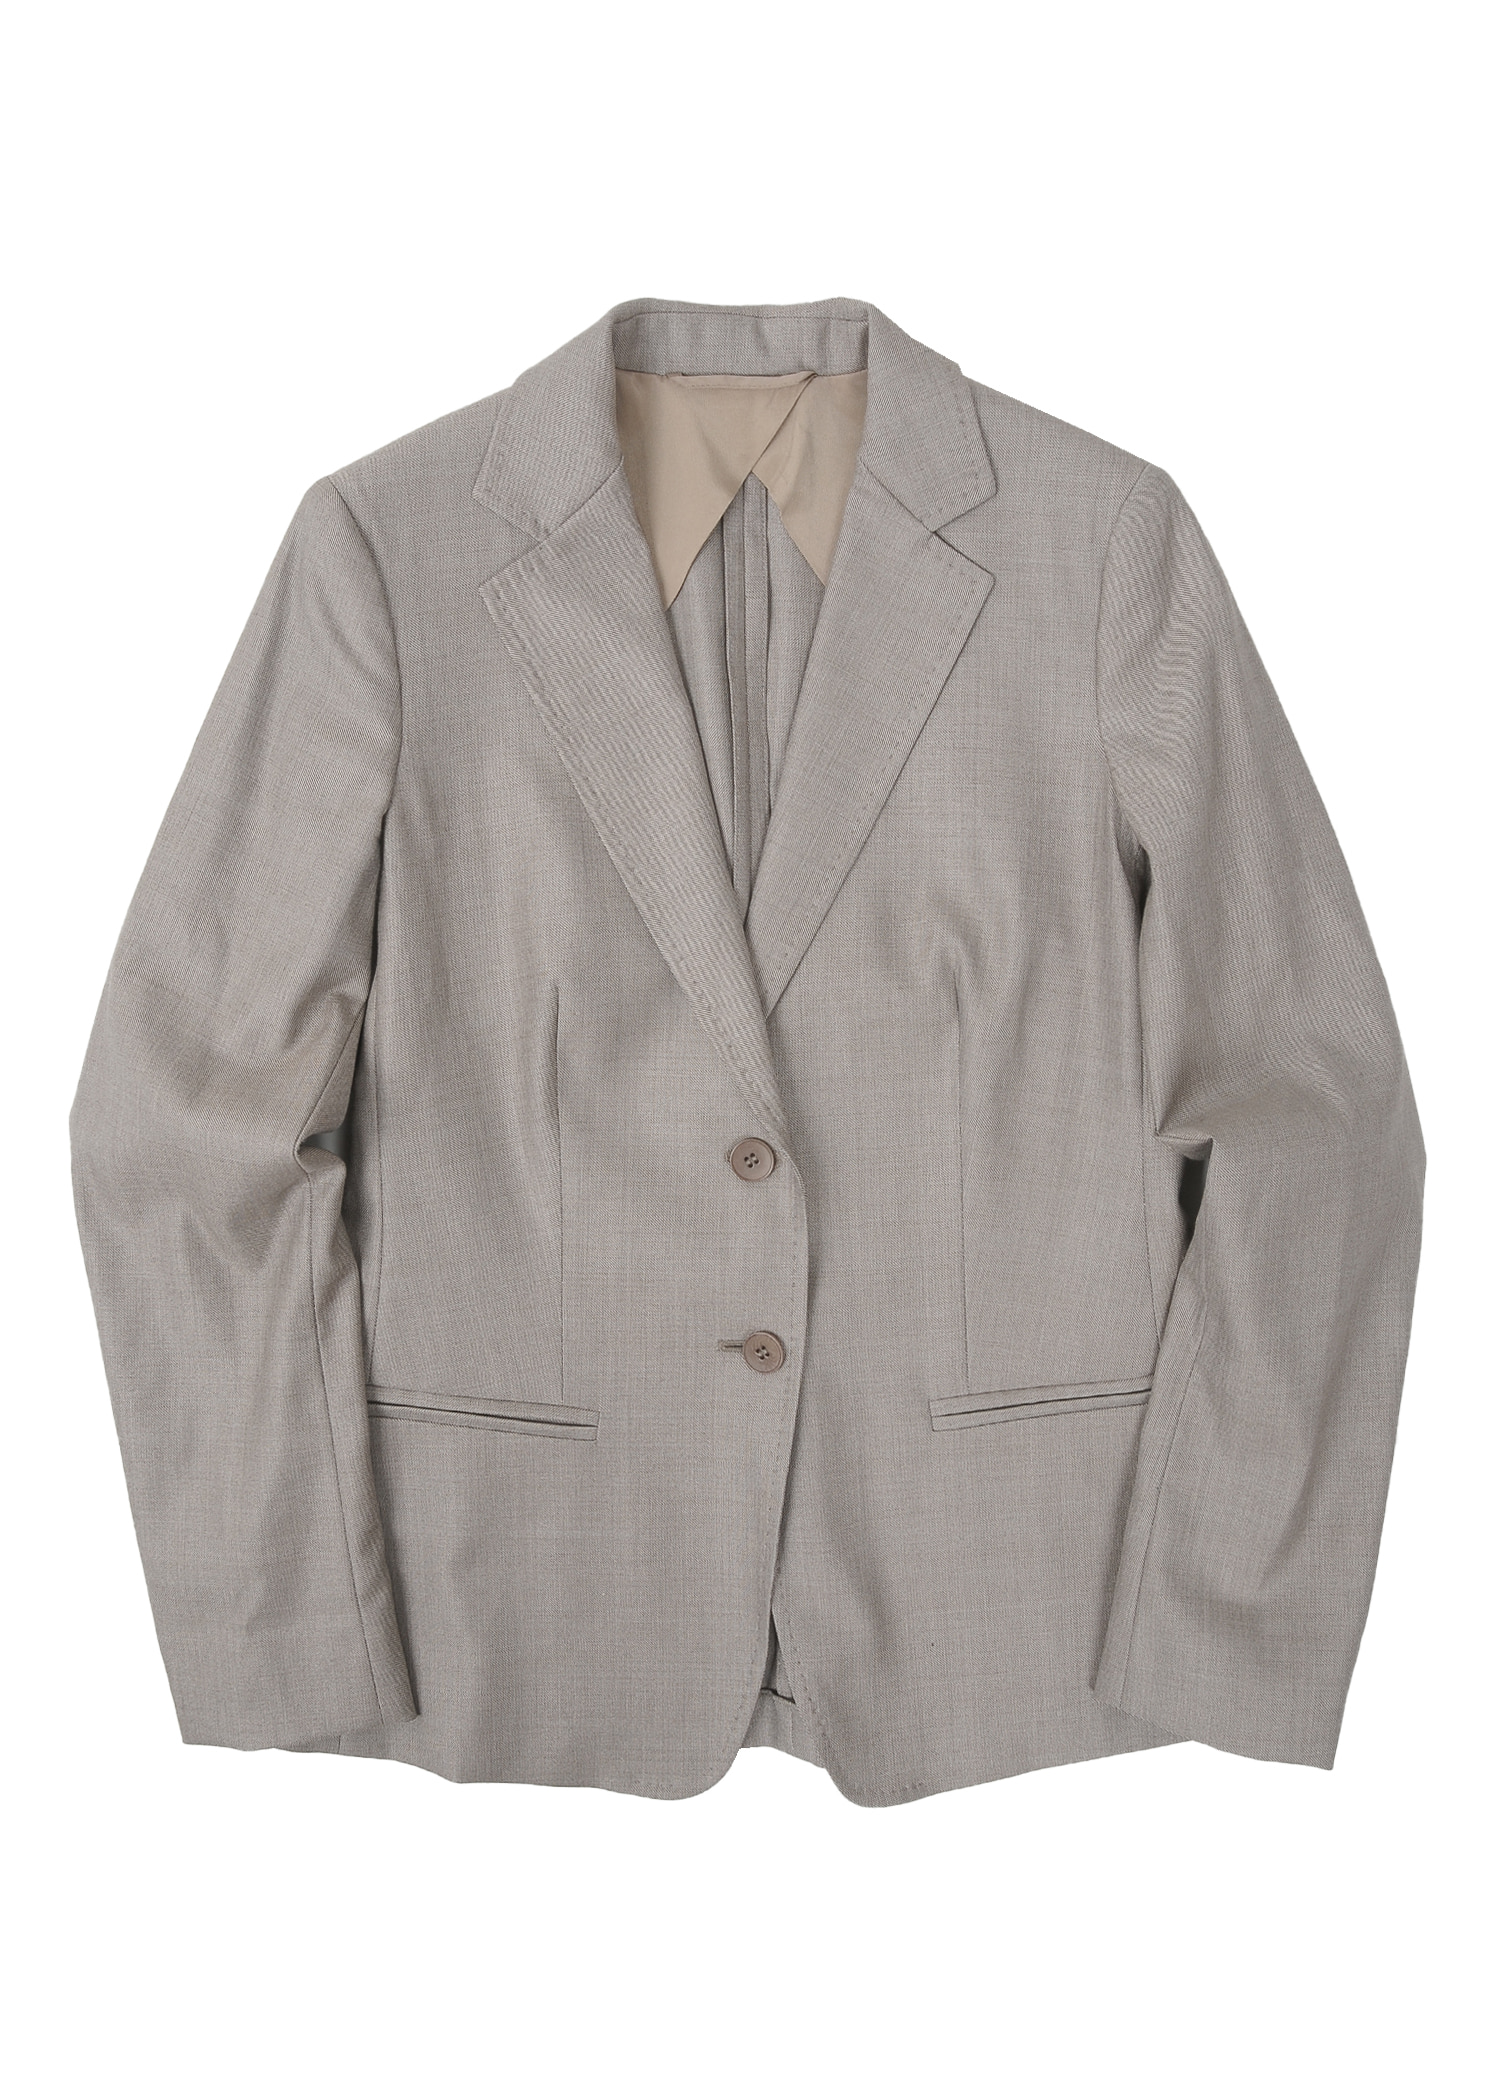 Max Mara silk blend jacket